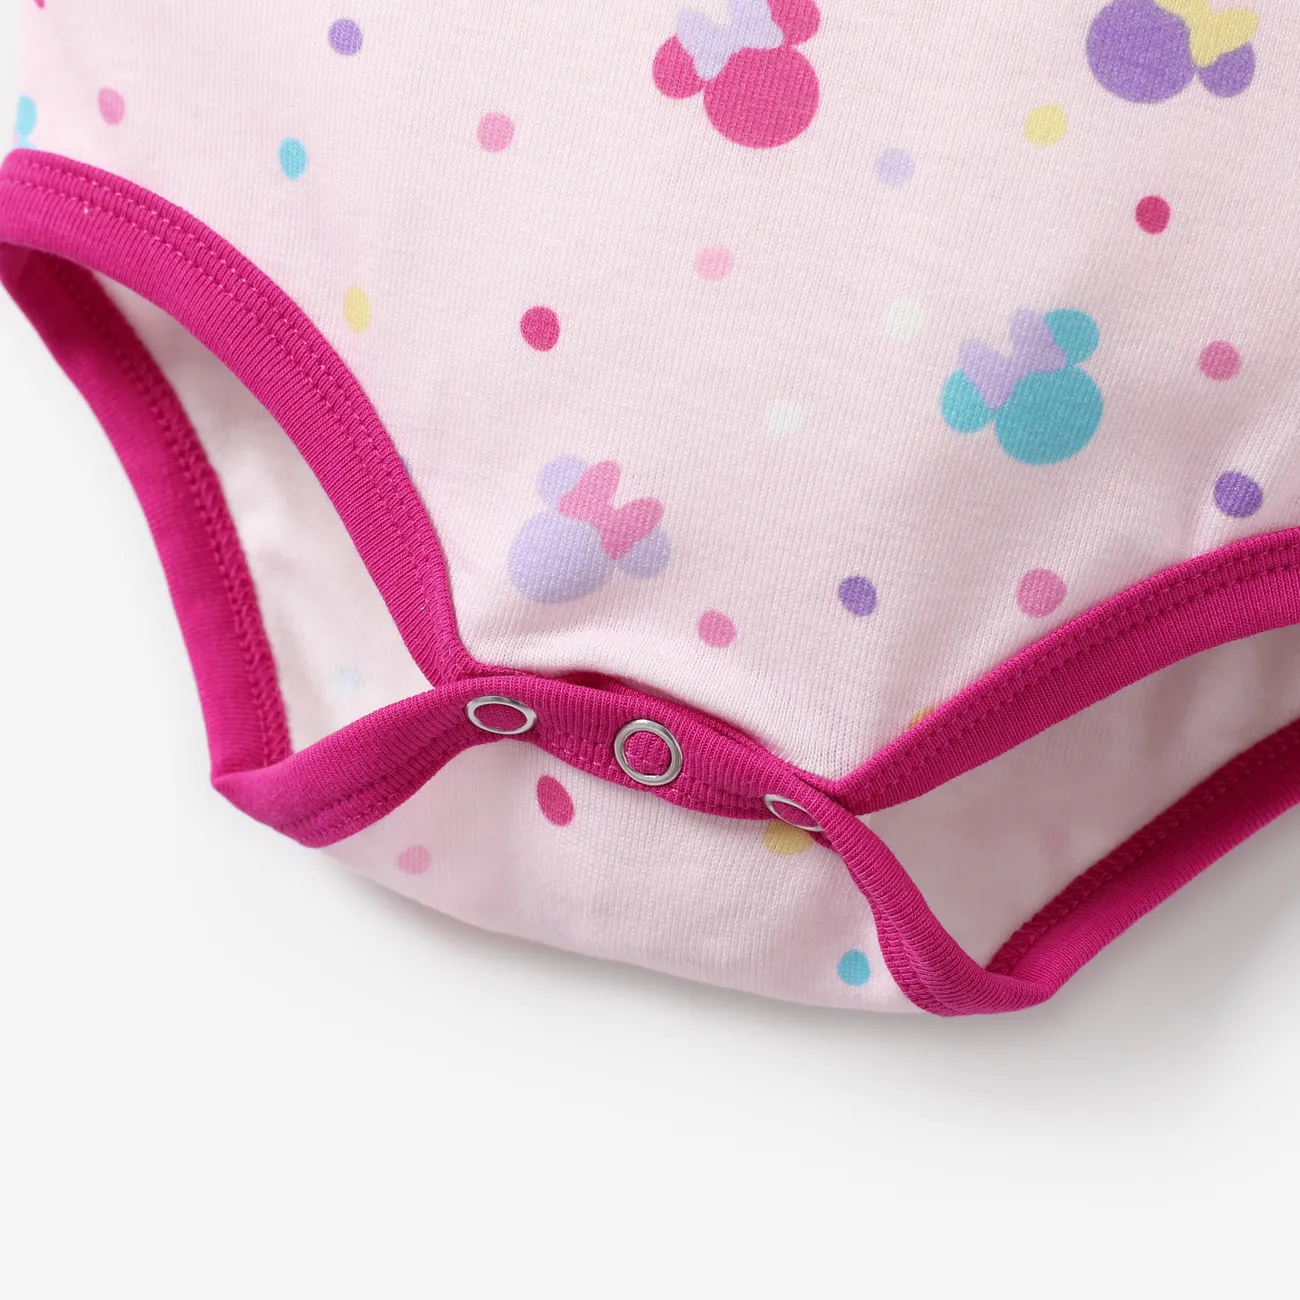 Disney Mickey and Friends Baby Girls/Boys Naia™ Character Print Polka Dot Romper with Pants Set Pink big image 1